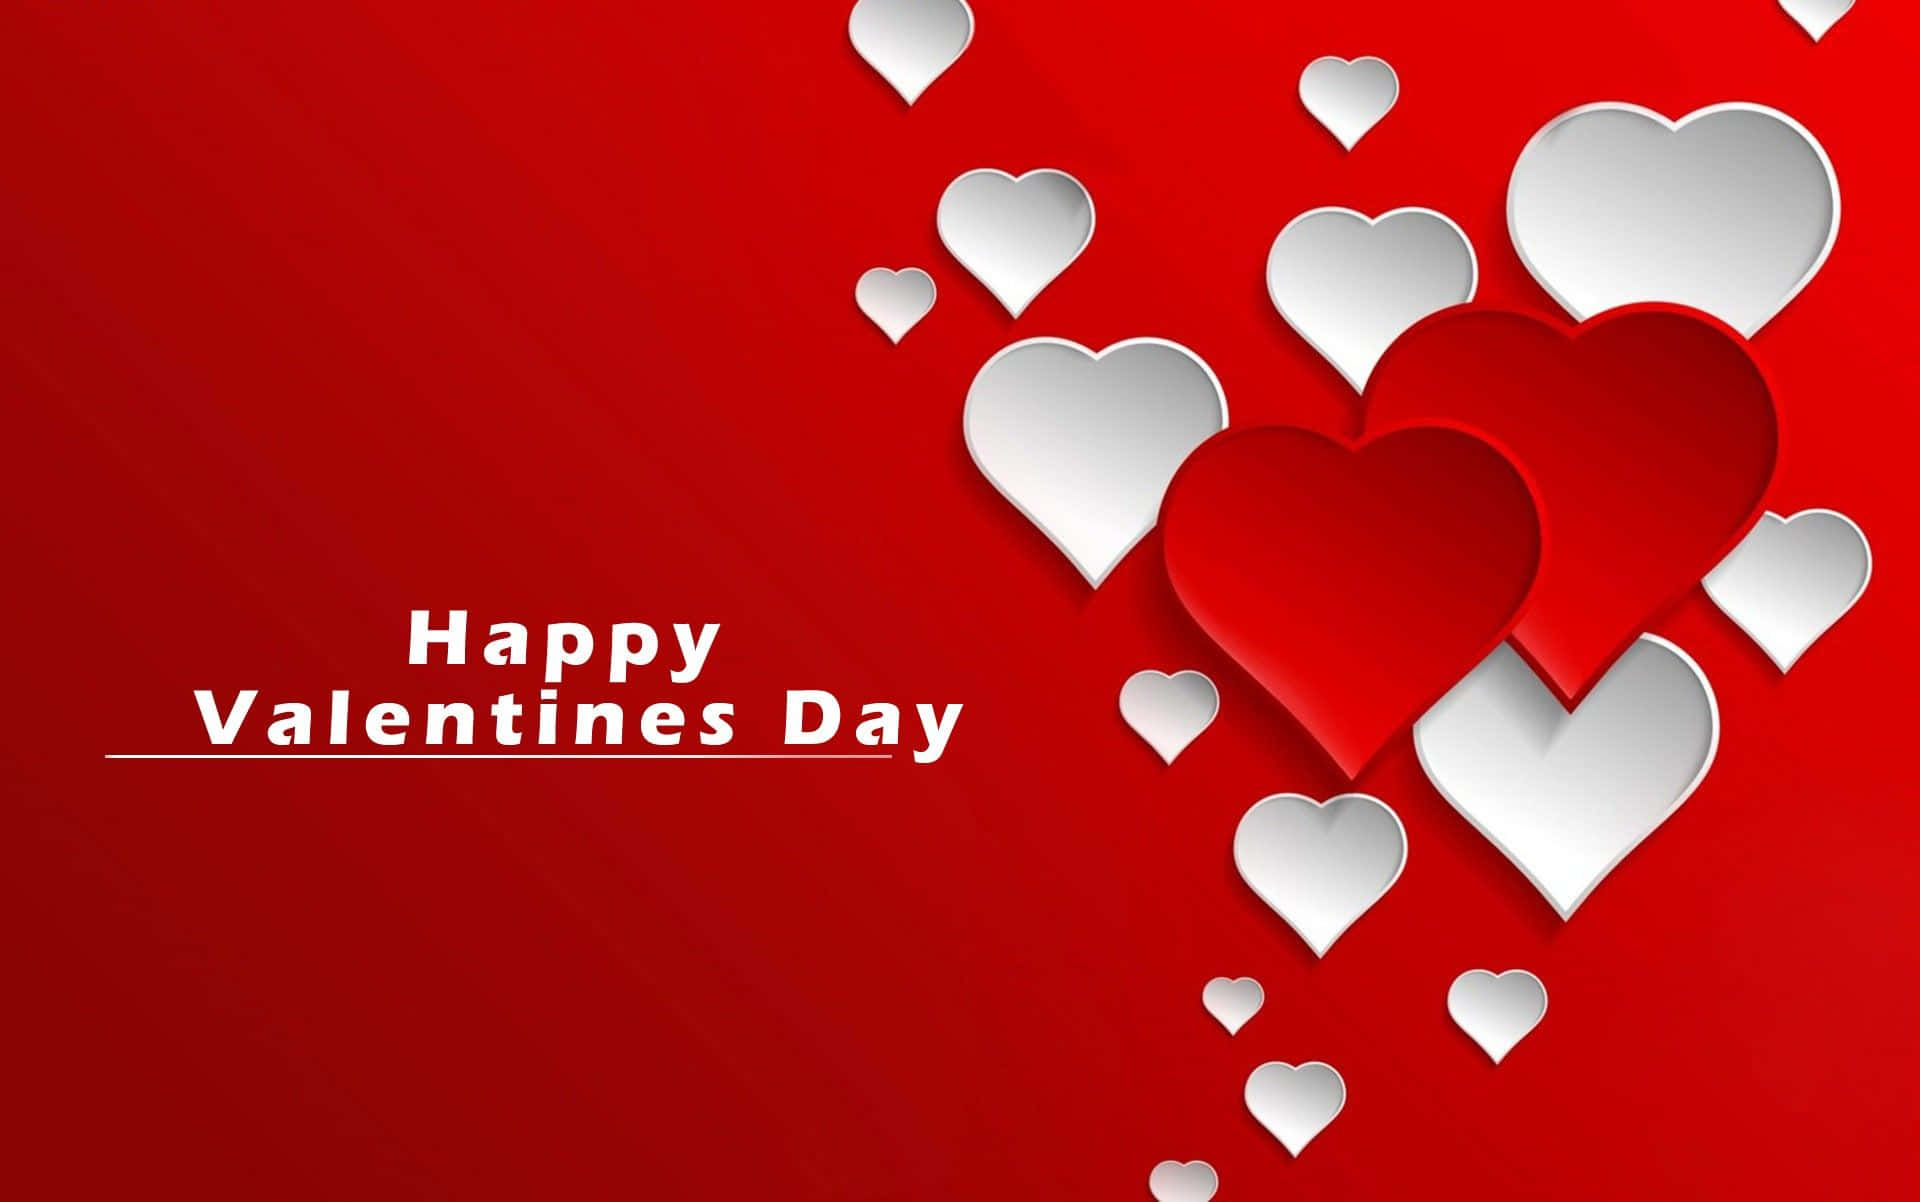 Celebrate Love this Valentine's Day